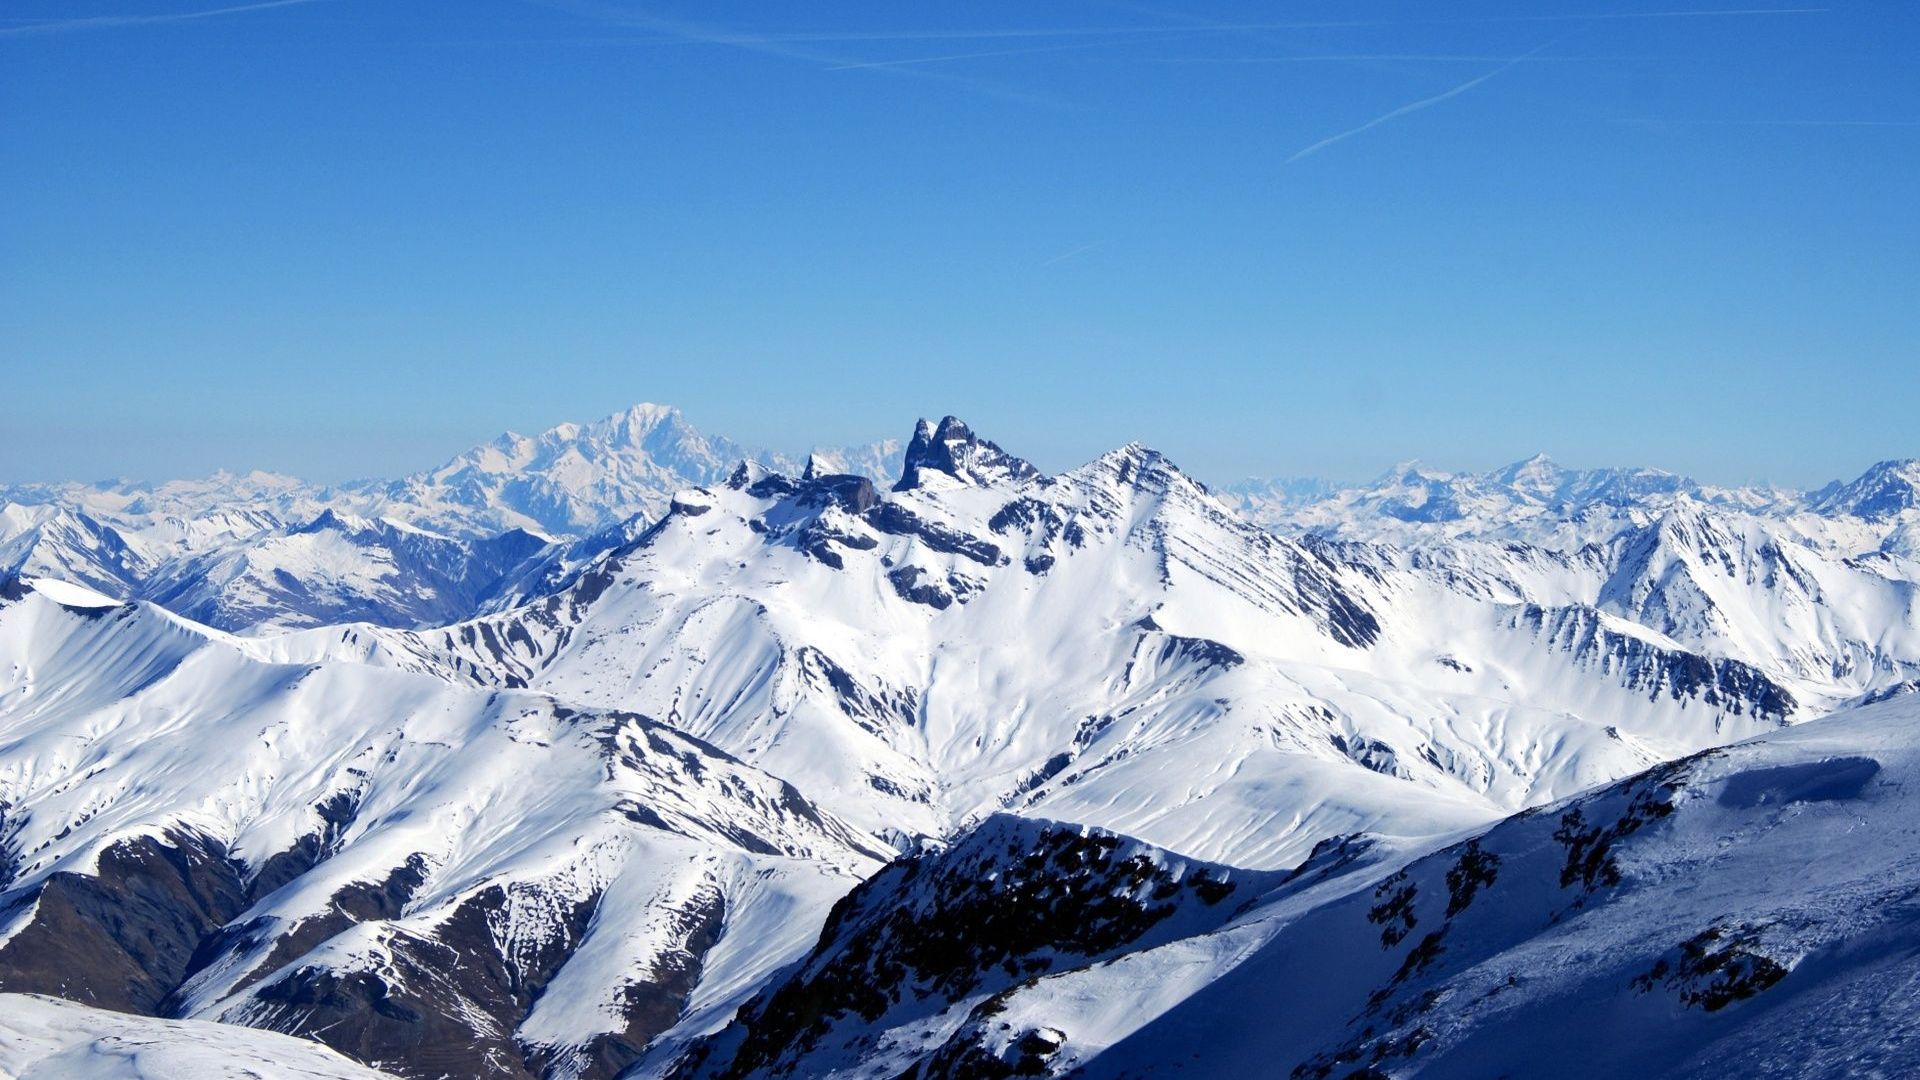  Alpen Hintergrundbild 1920x1080. Herunterladen 1920x1080 Full HD Hintergrundbilder alpen felsen schnee berge bergspitzen himmel 1080p